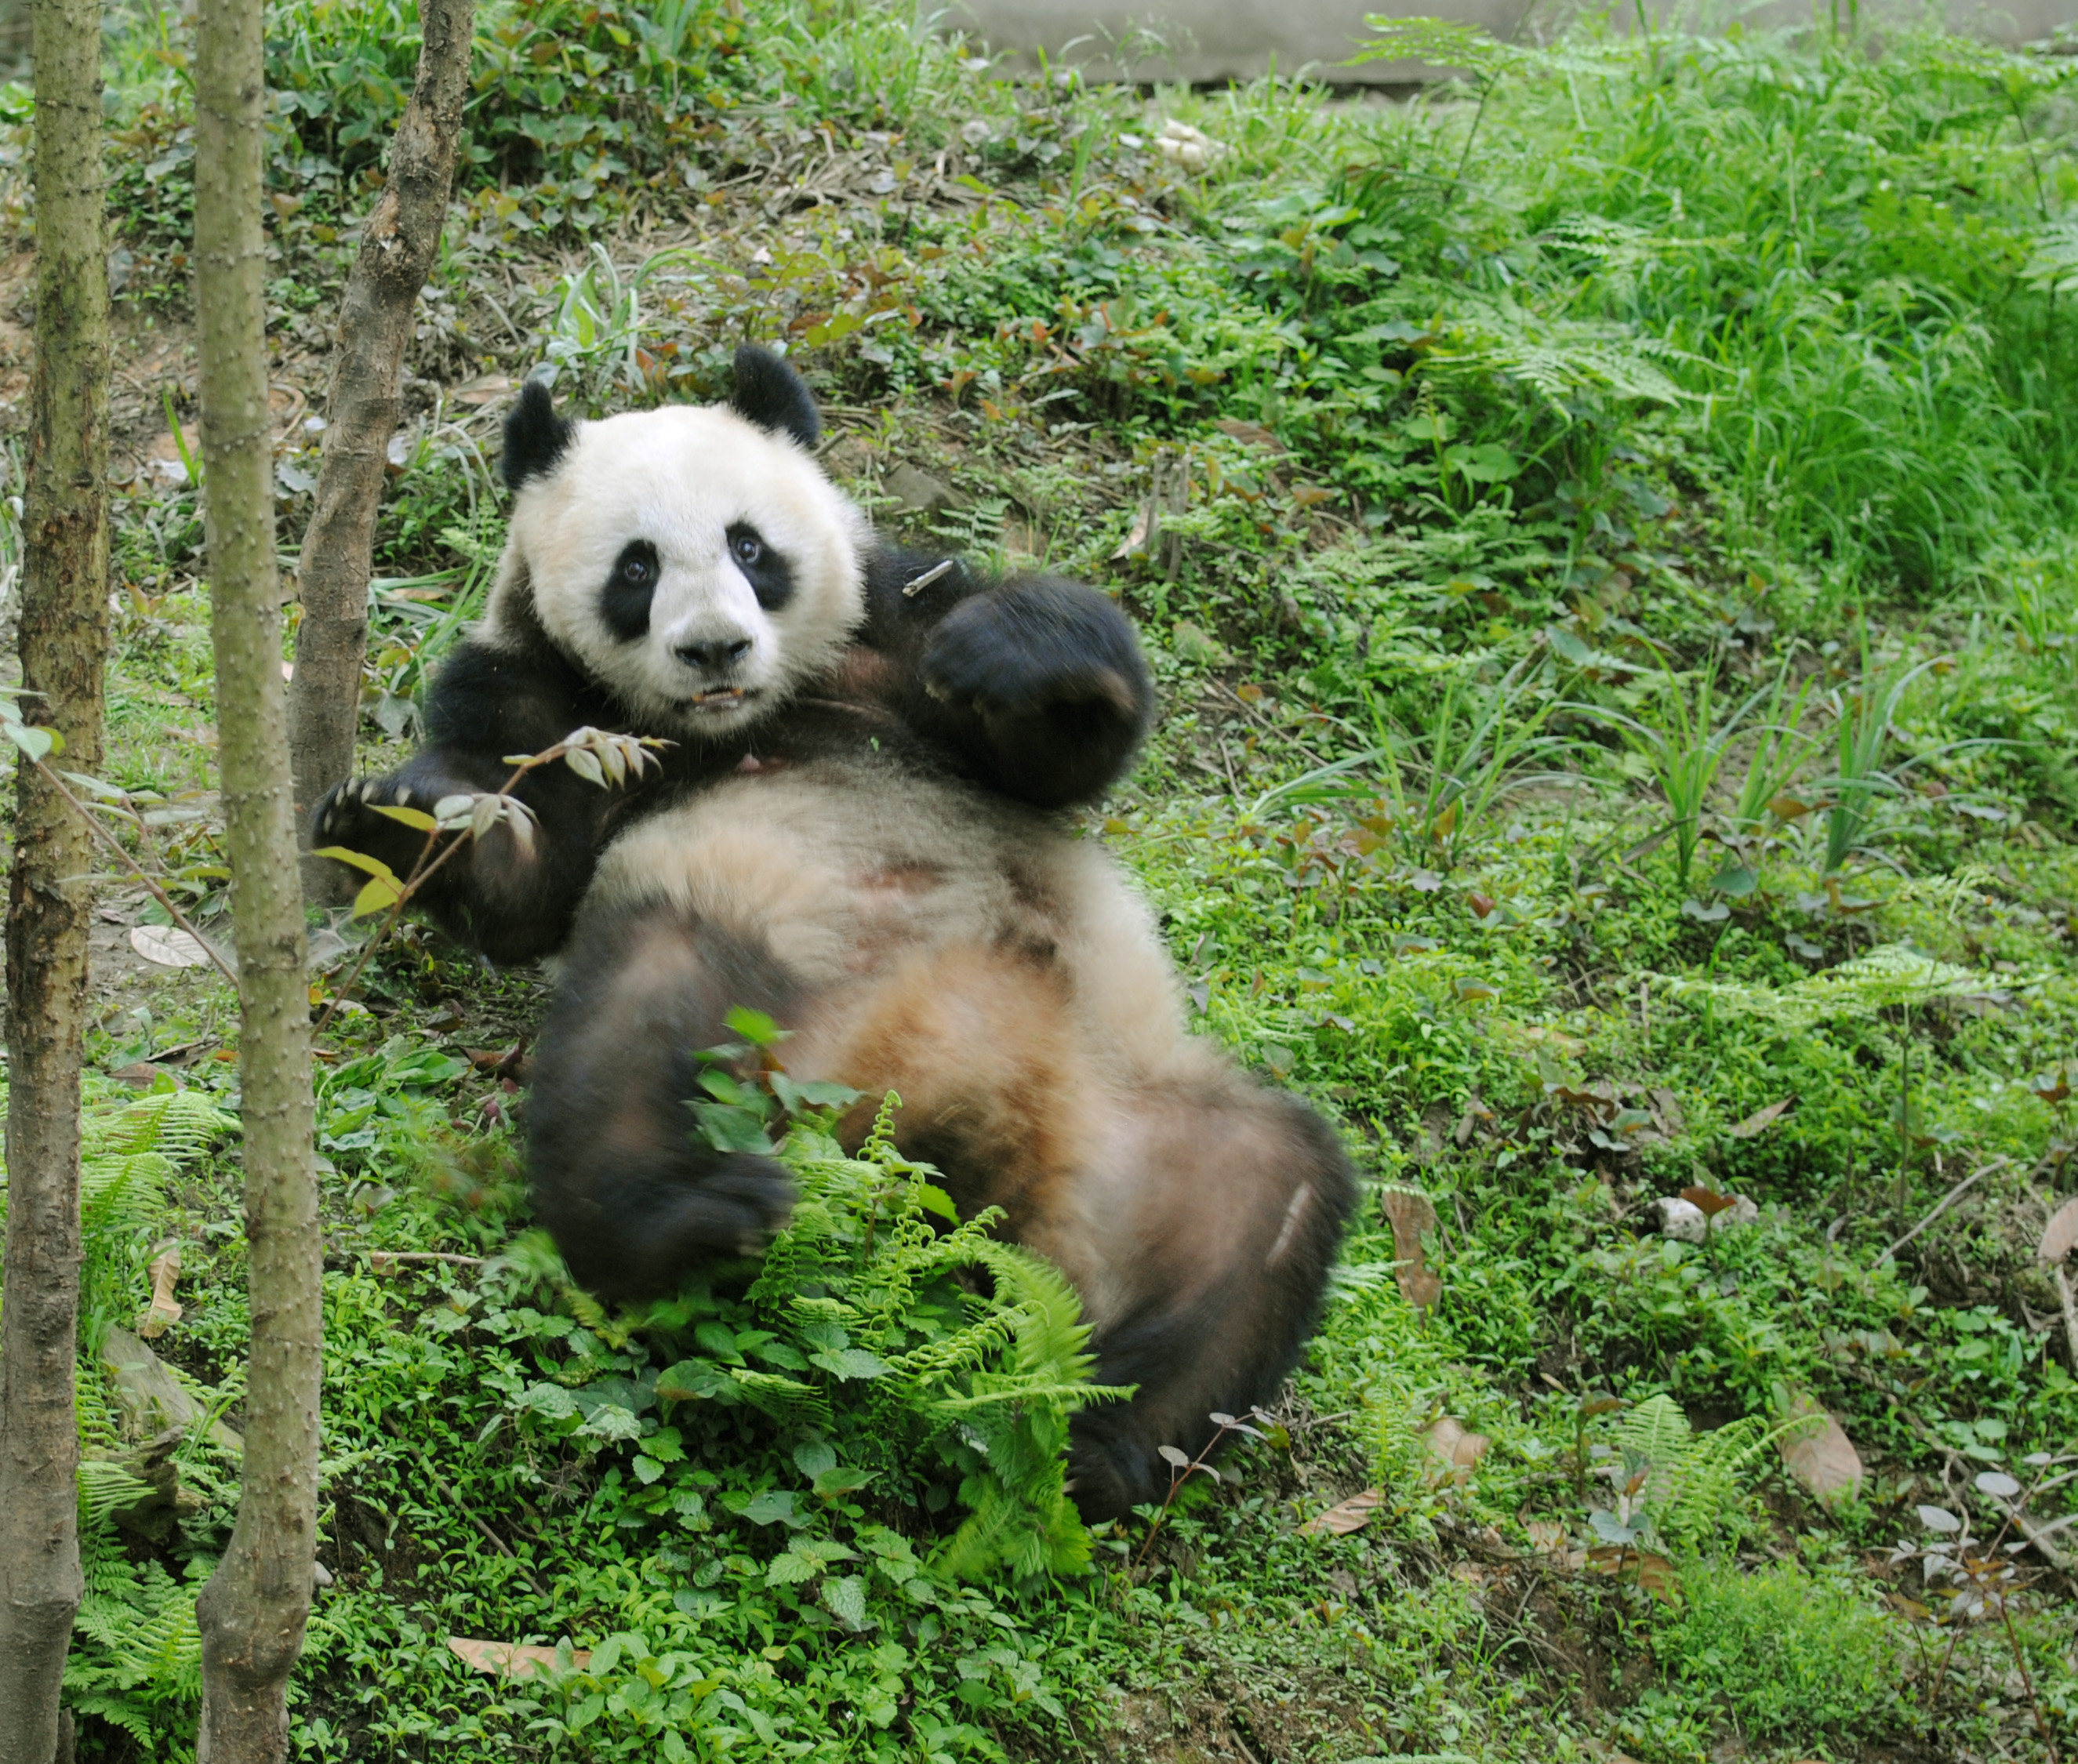 Weekly Panda Bulletin from Bifengxia: May 4th 2015